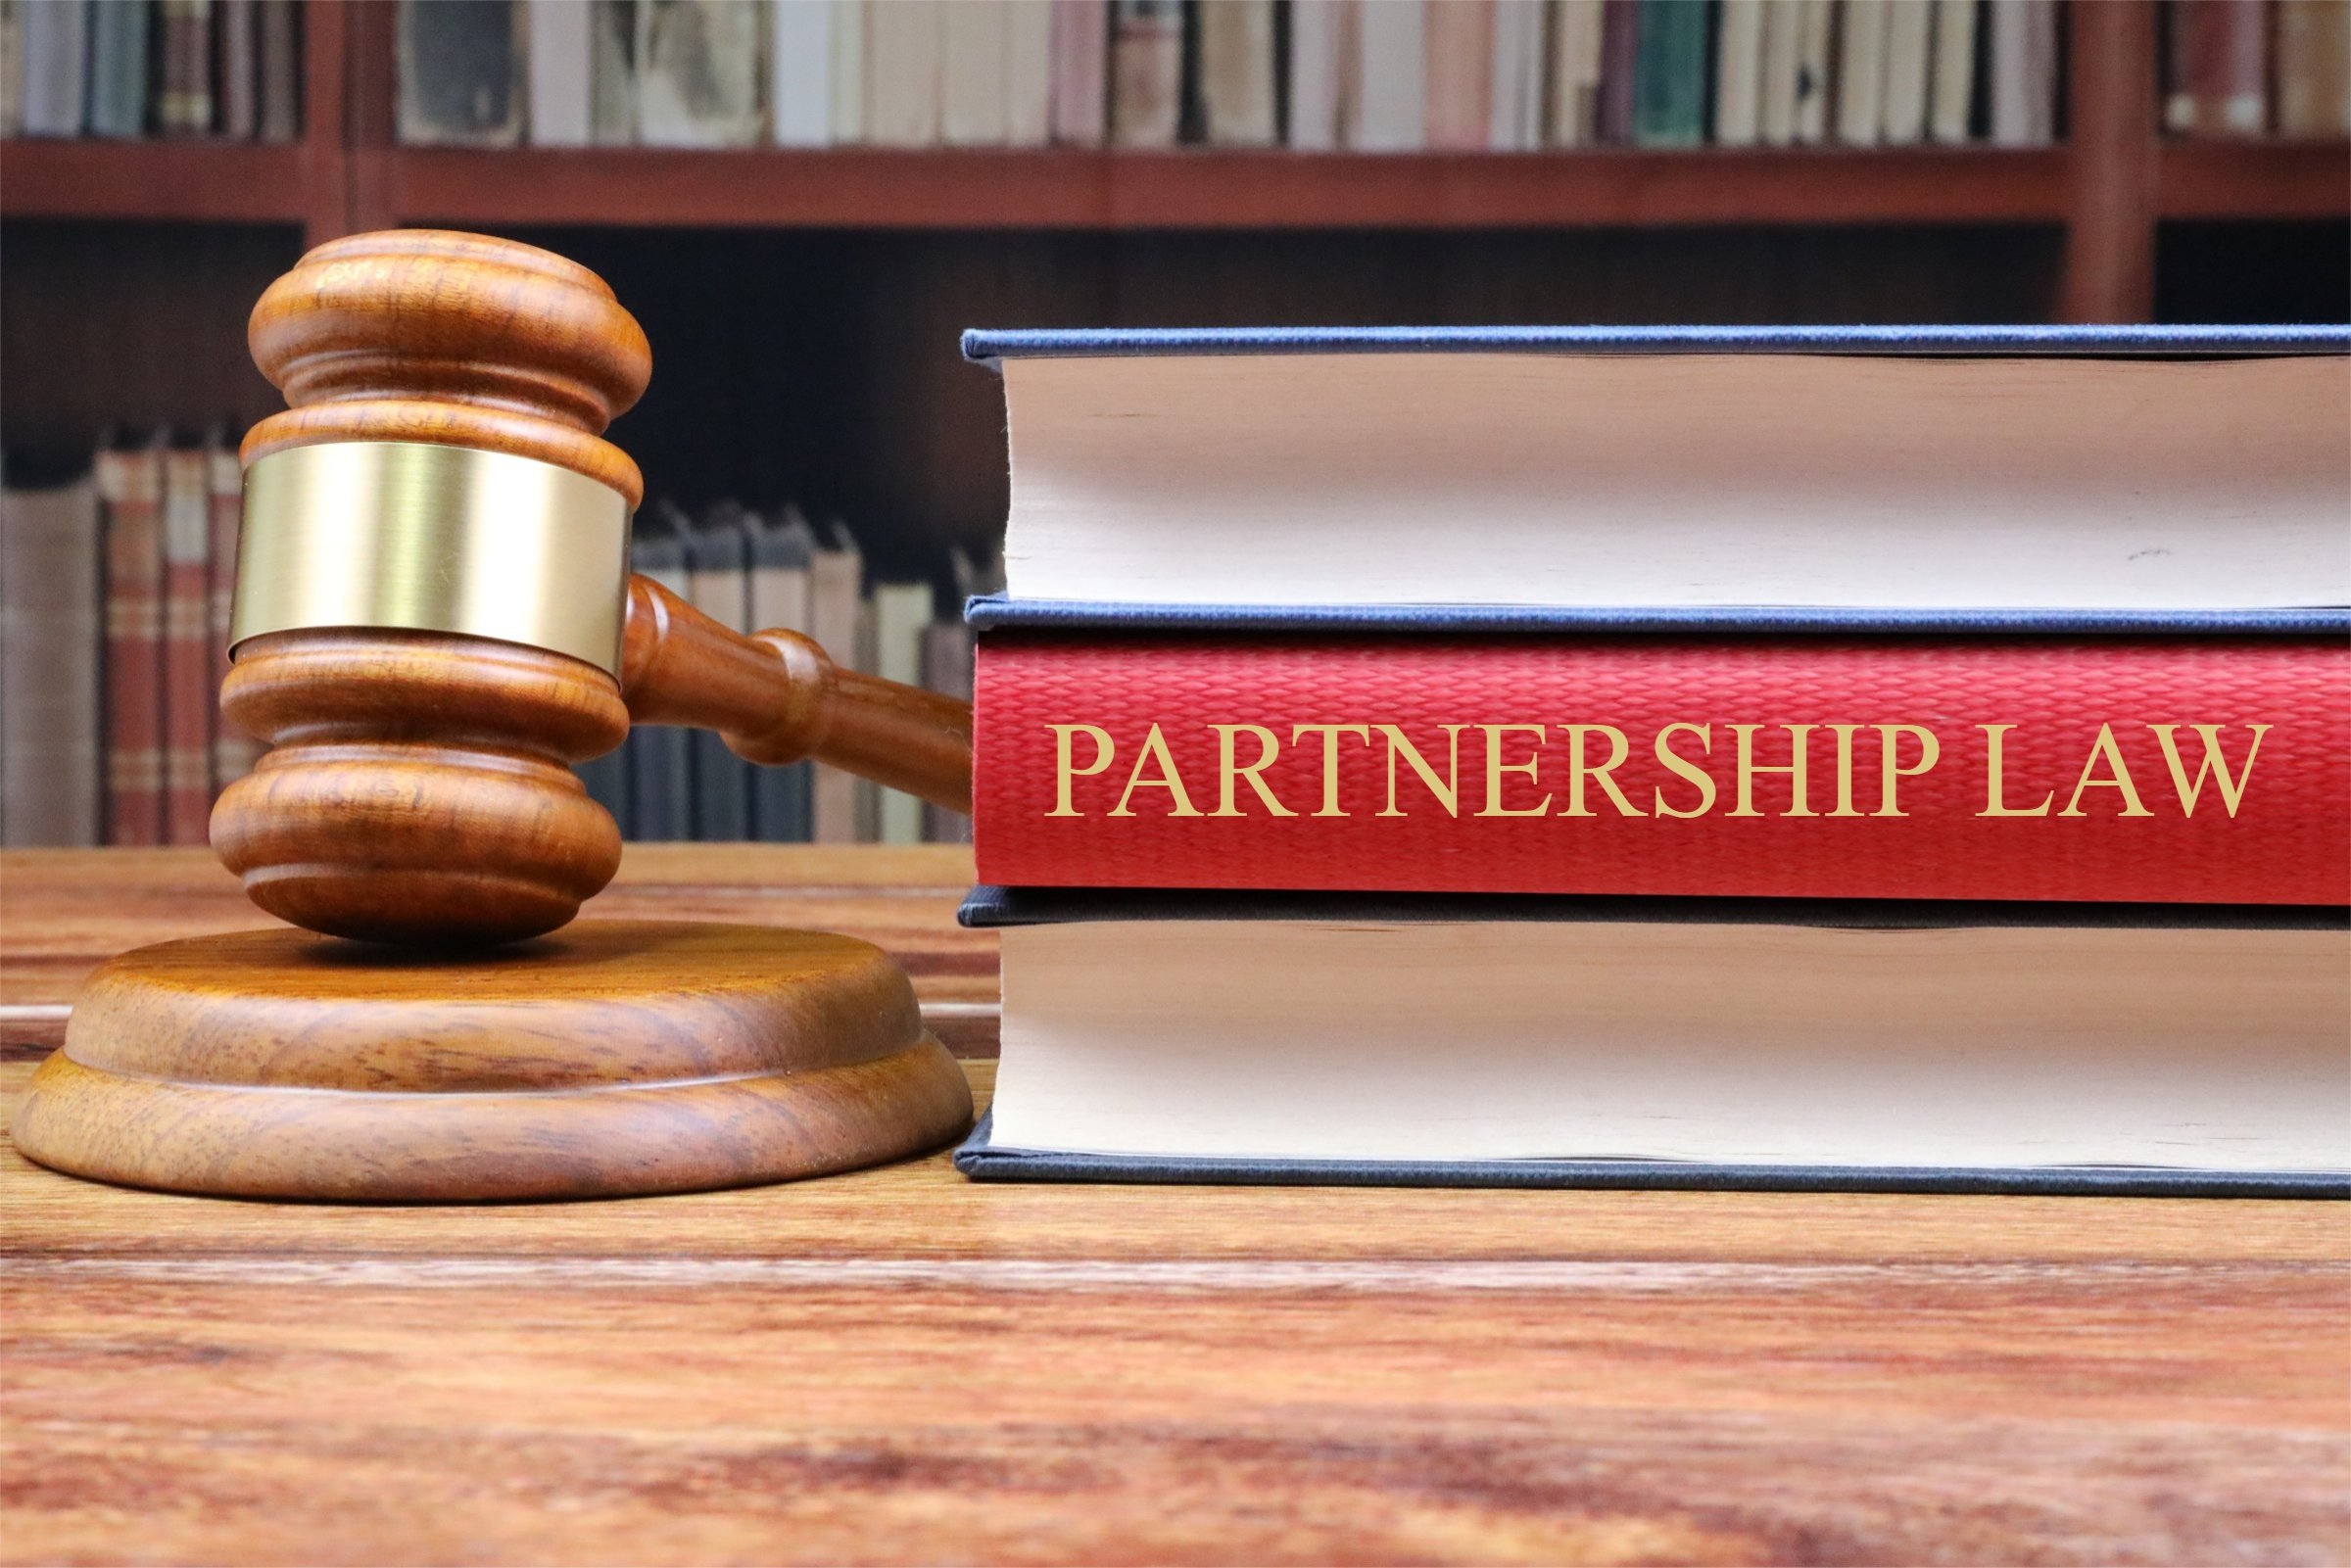 partnership law